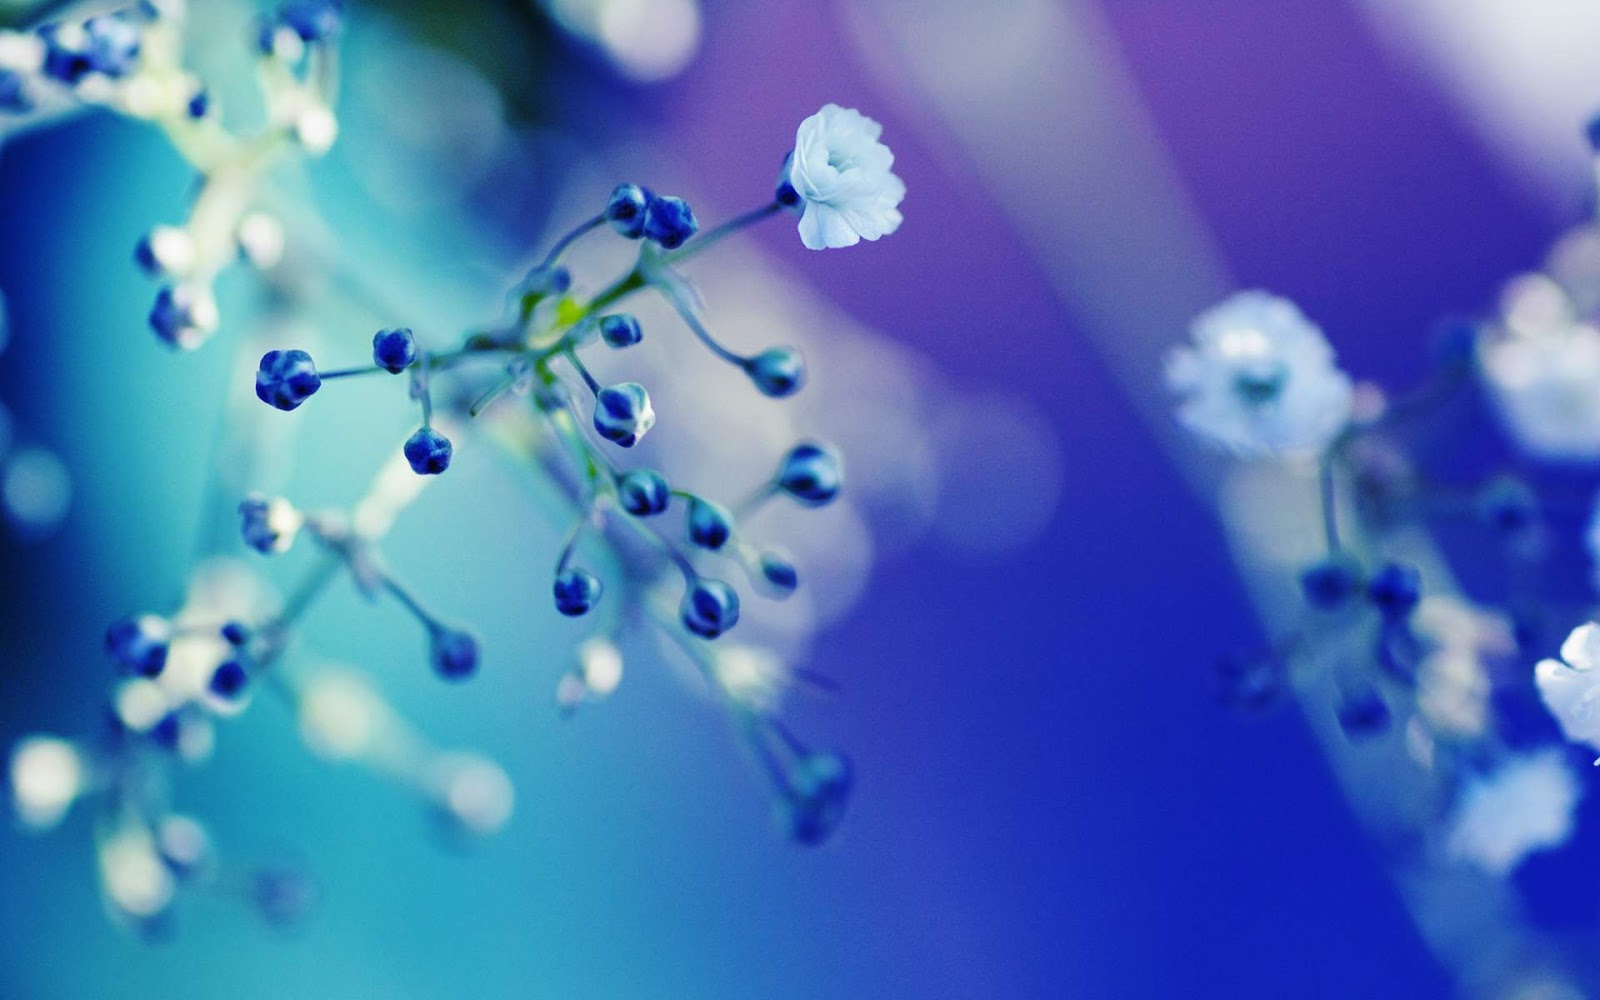 blue white flower close up wallpaper hd high resolution backgrounds hd